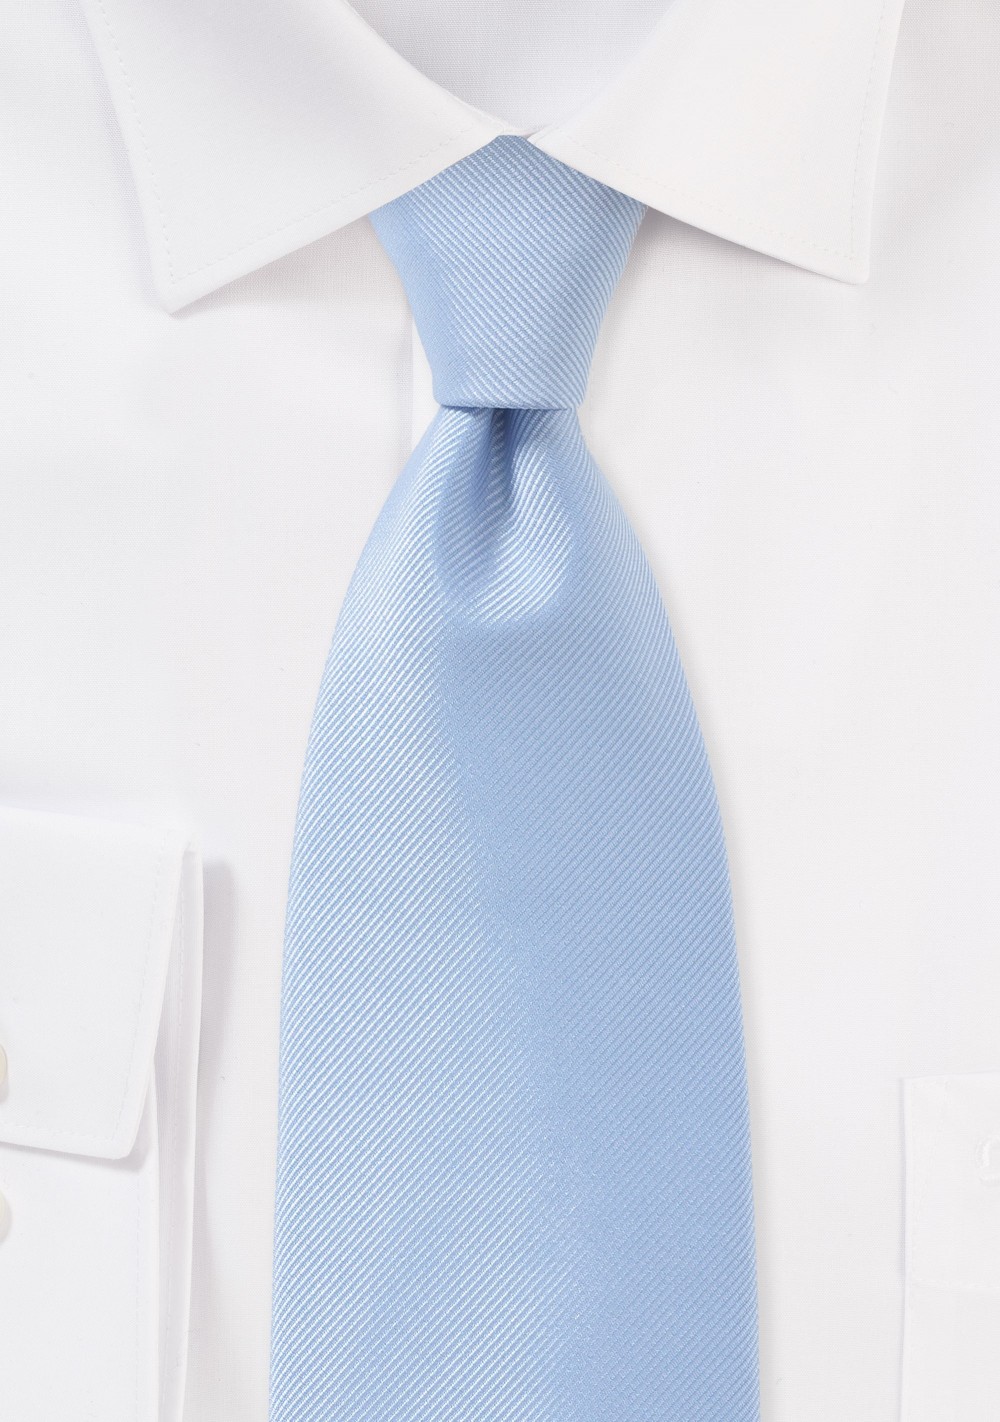 Textured Tie in Light Blue